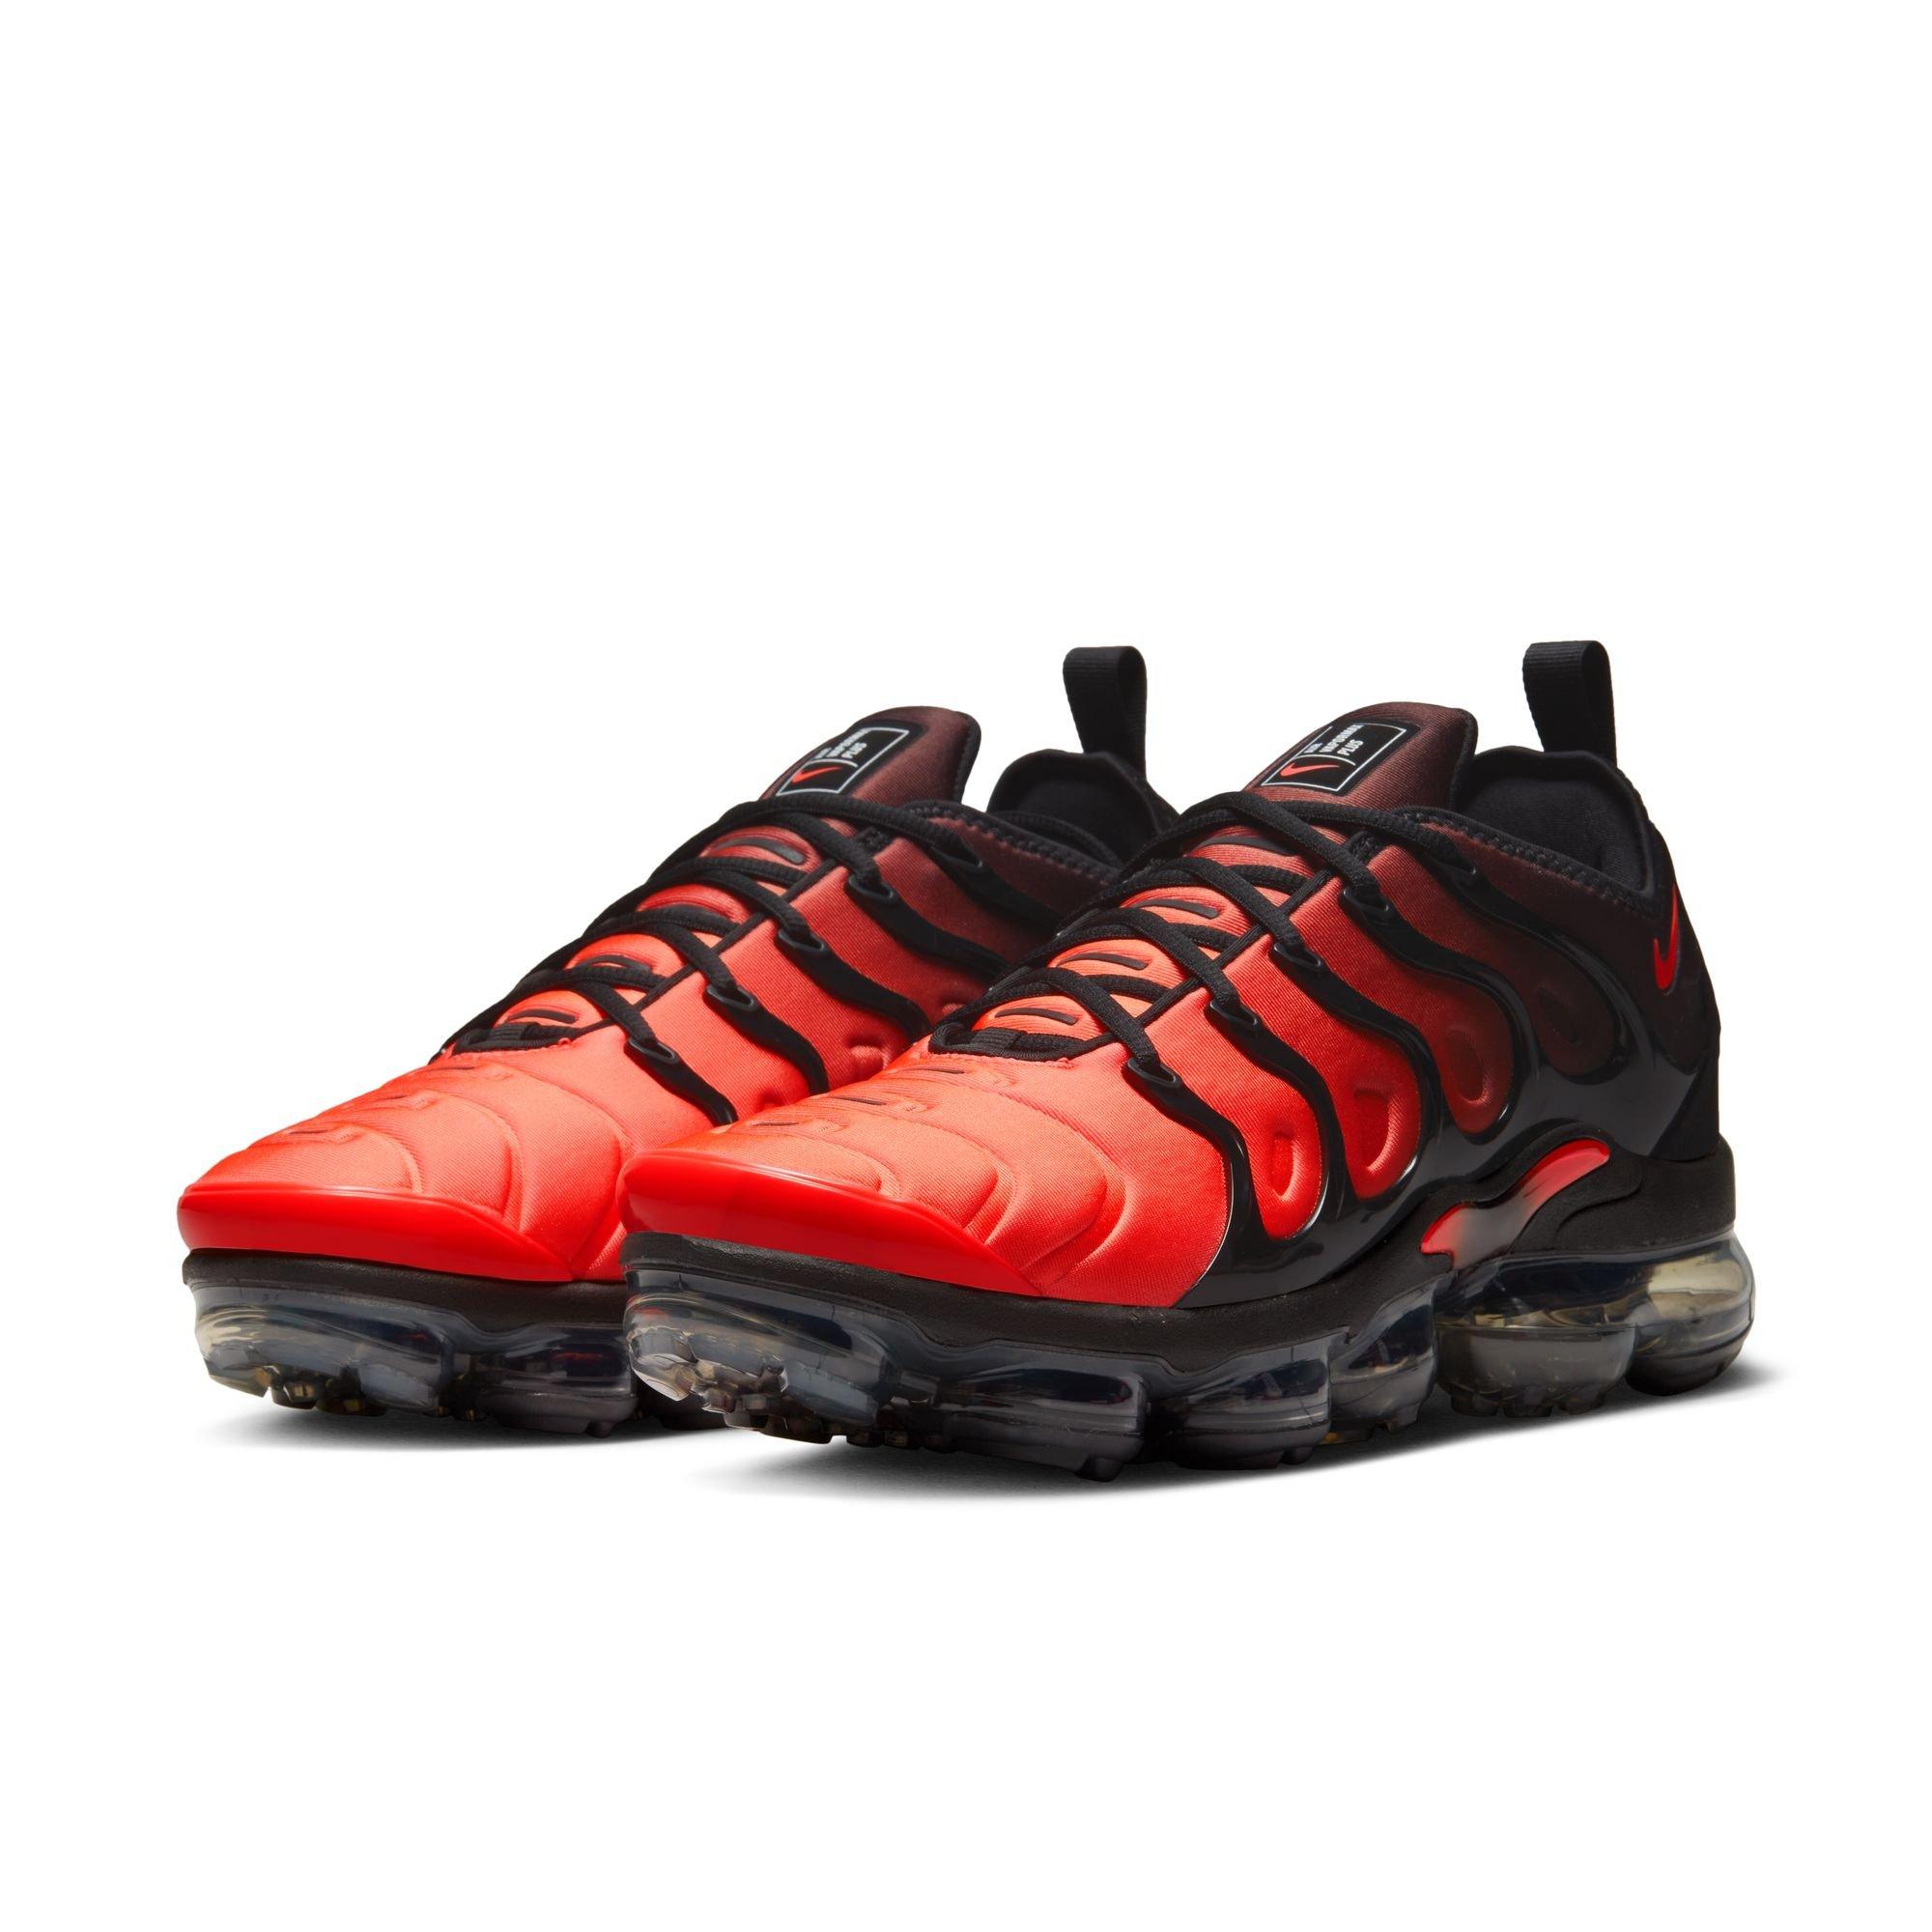 Nike Air Plus "Black/Bright Crimson/Anthracite/White" Men's Shoe